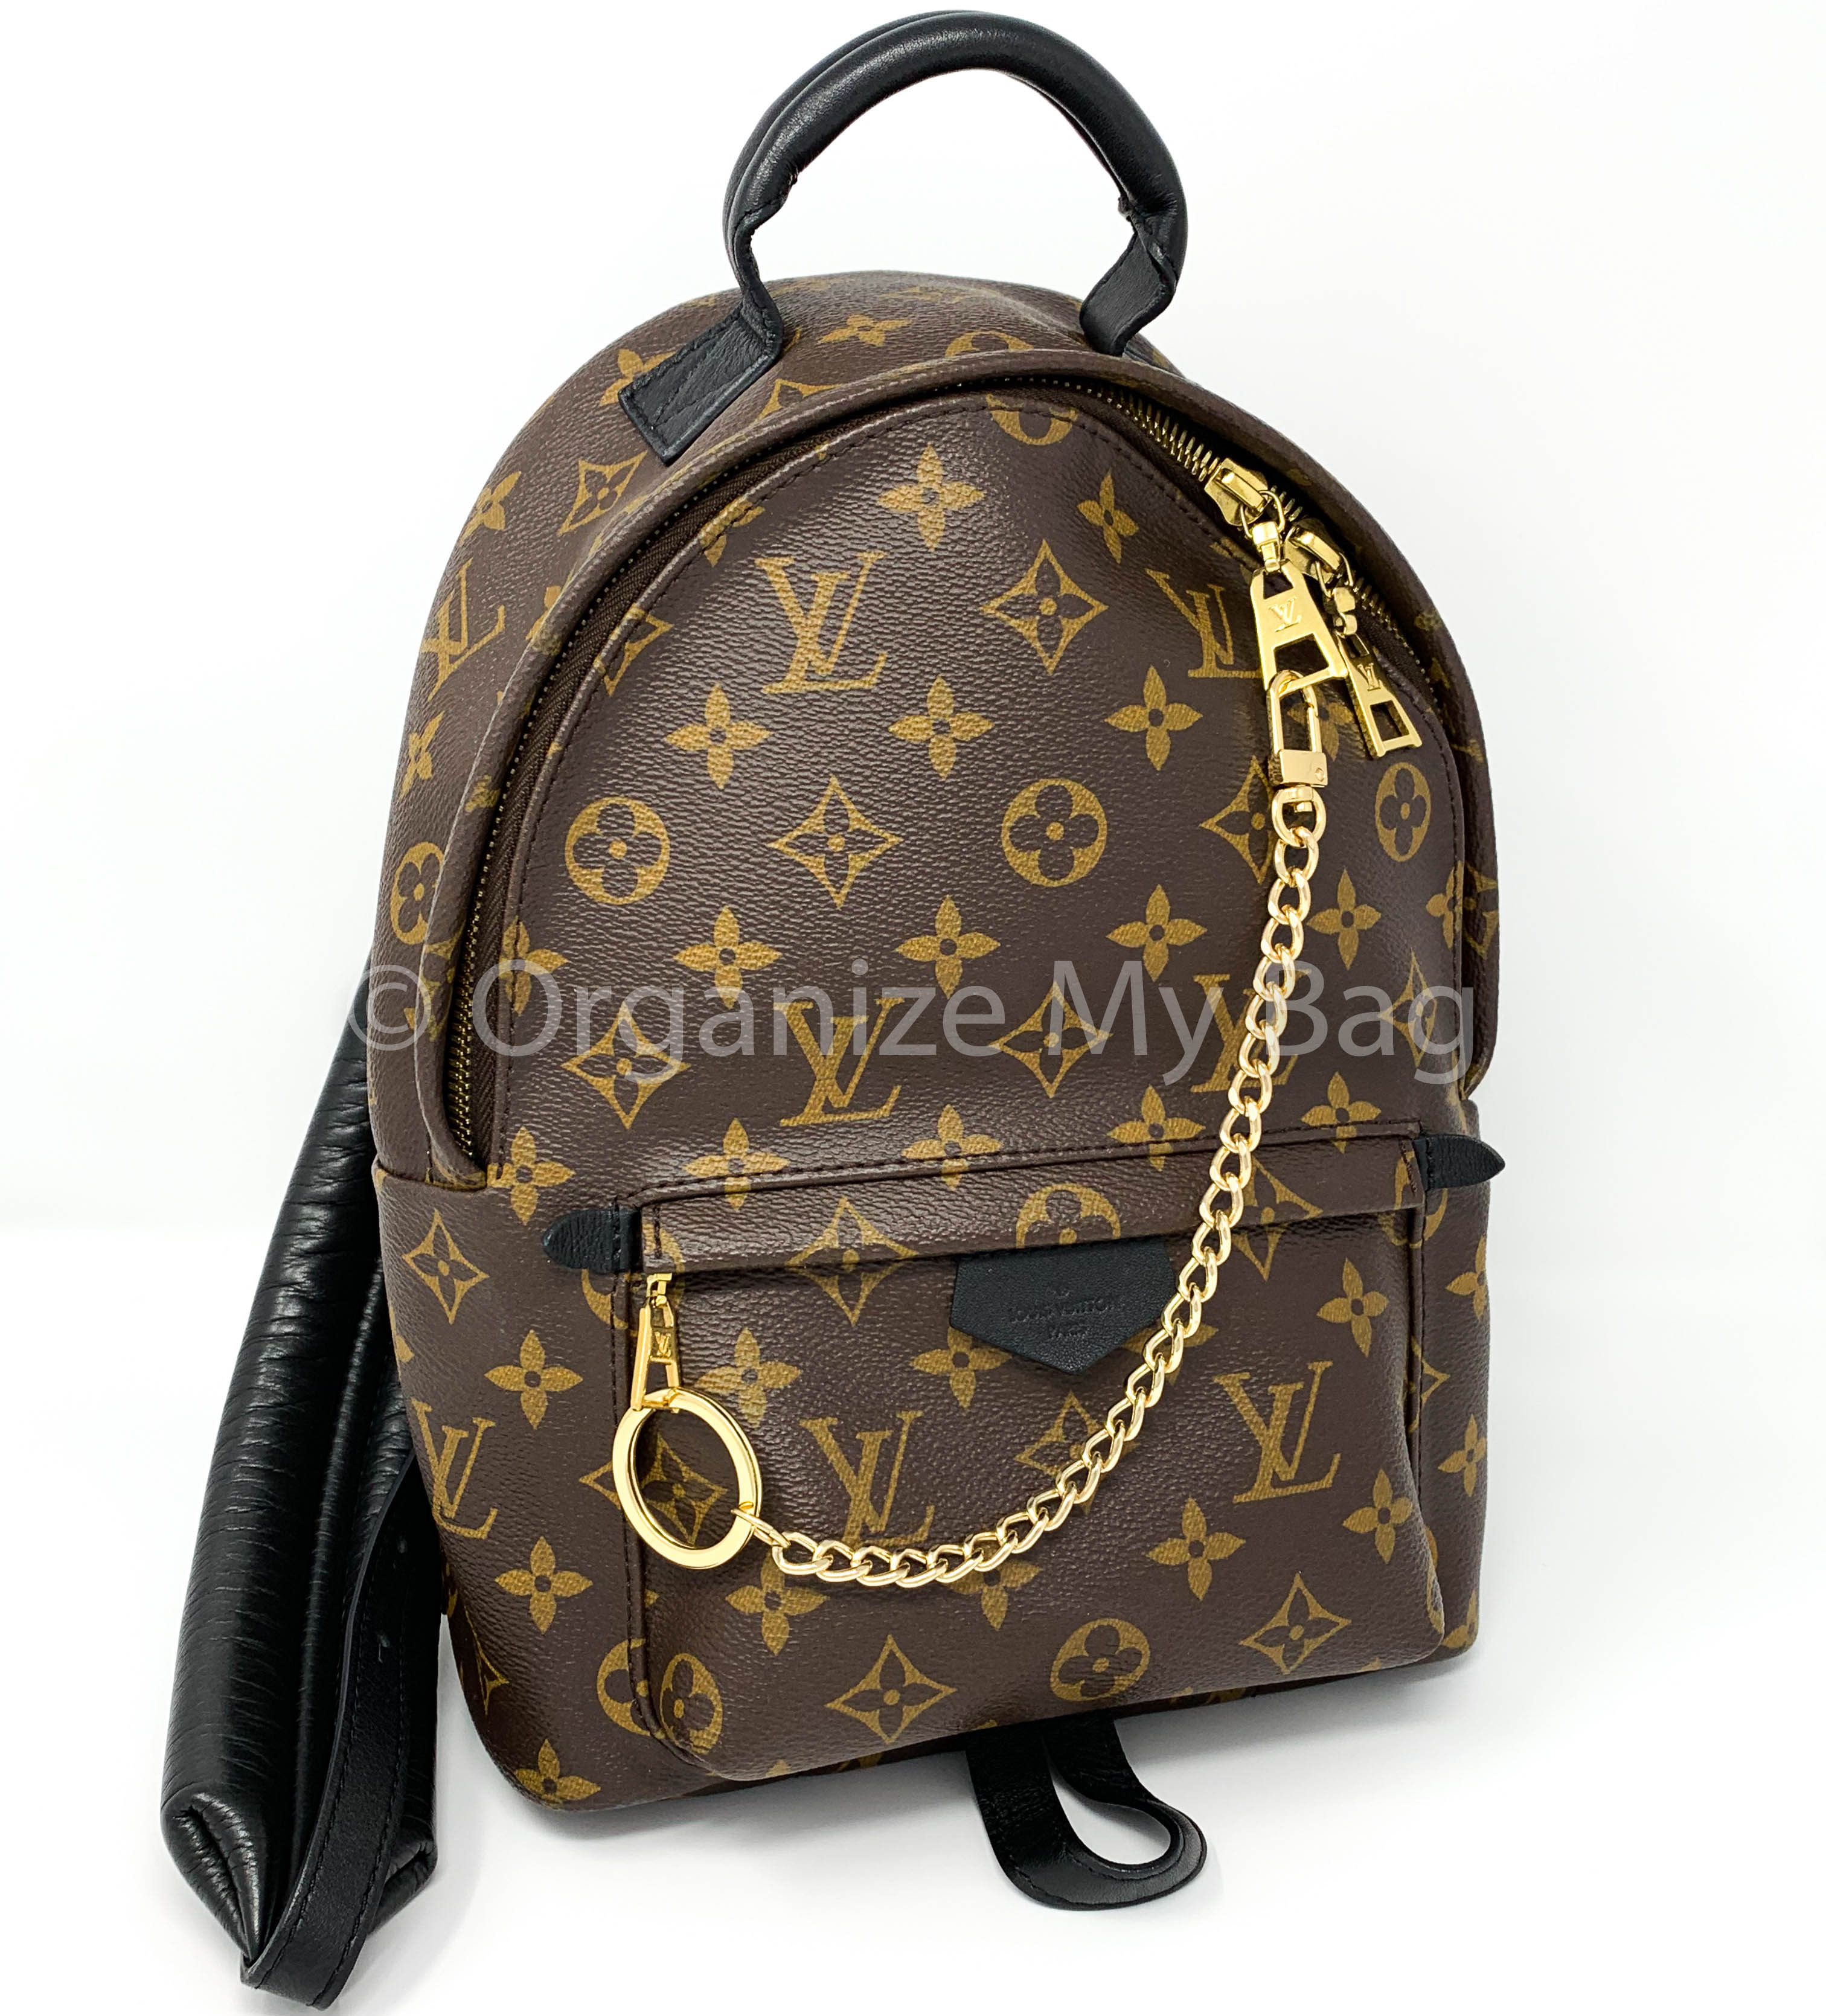 Thoughts on Louis Vuitton Palm Springs Mini? : r/handbags